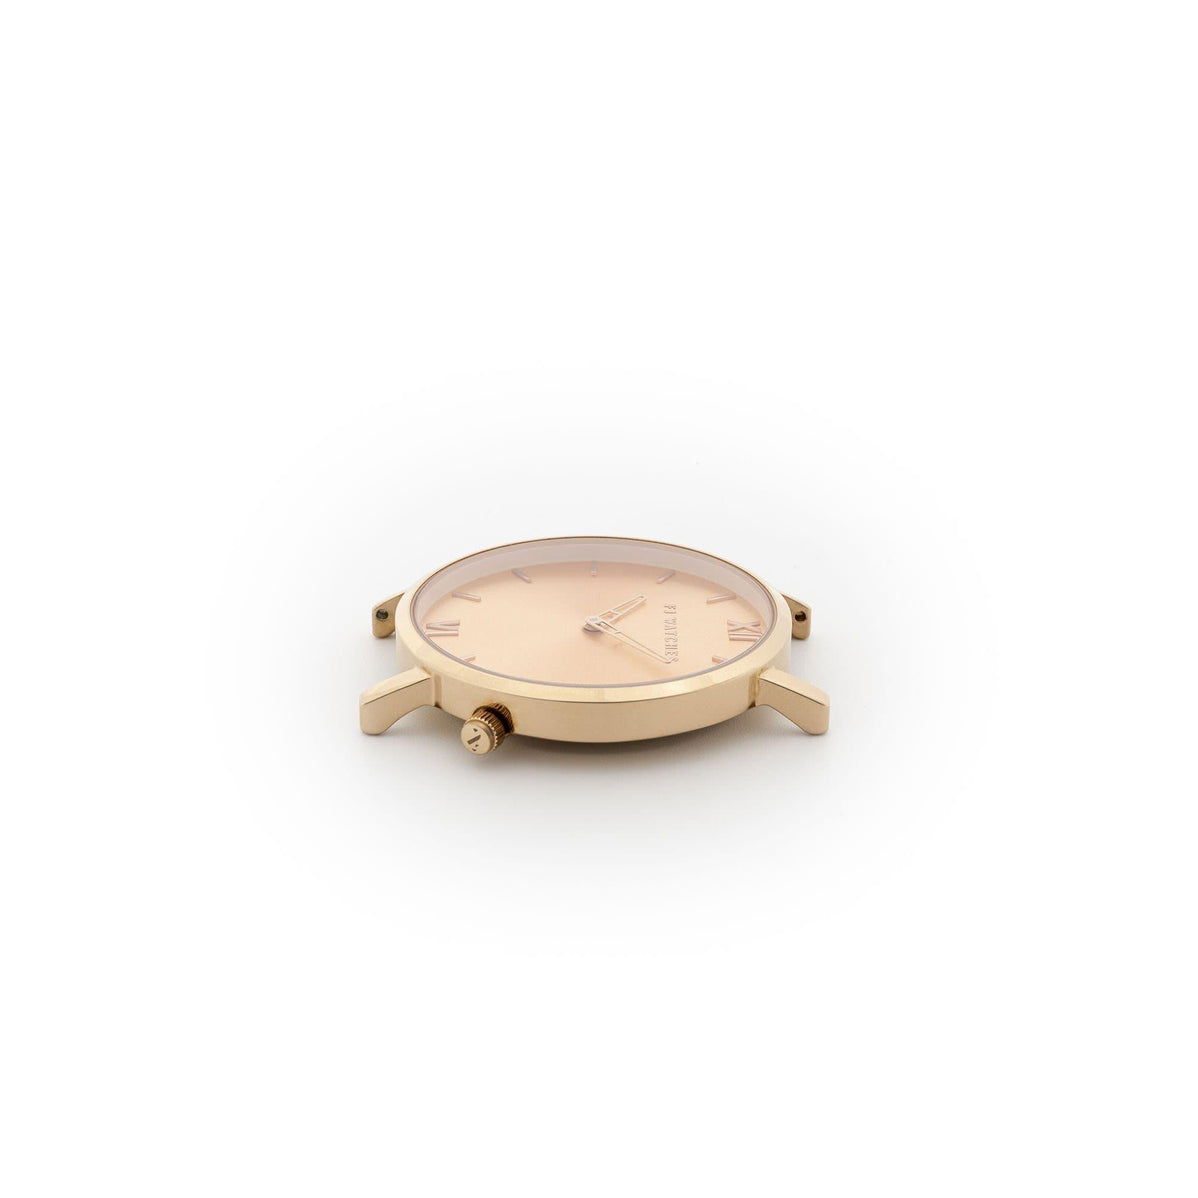 FJ Watches sunset rose gold rosegold watch women 36mm minimalist dial